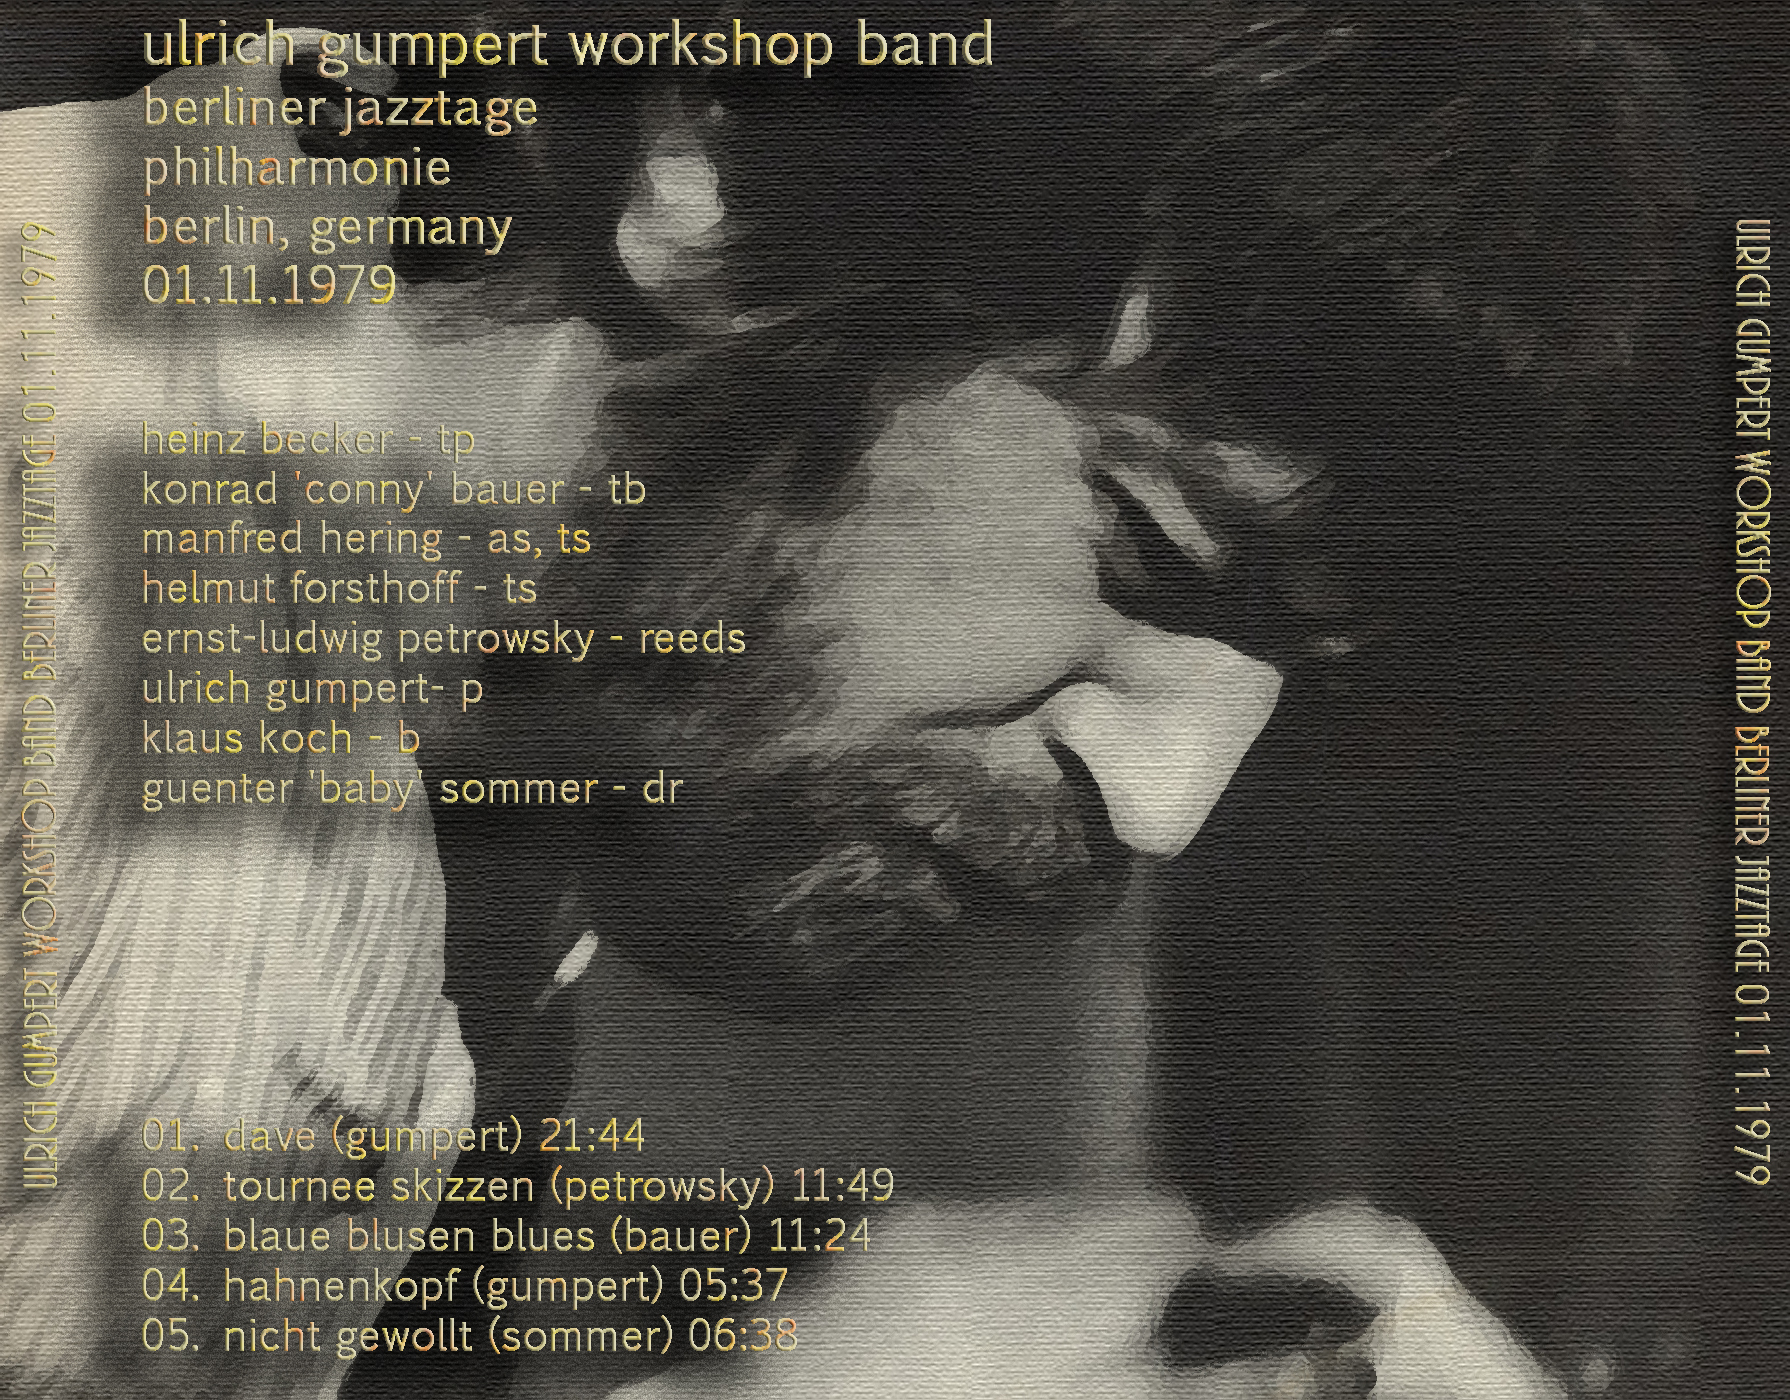 UlrichGumpertWorkshopBand1979-11-01PhilharmonieBerlinGermany (2).jpg